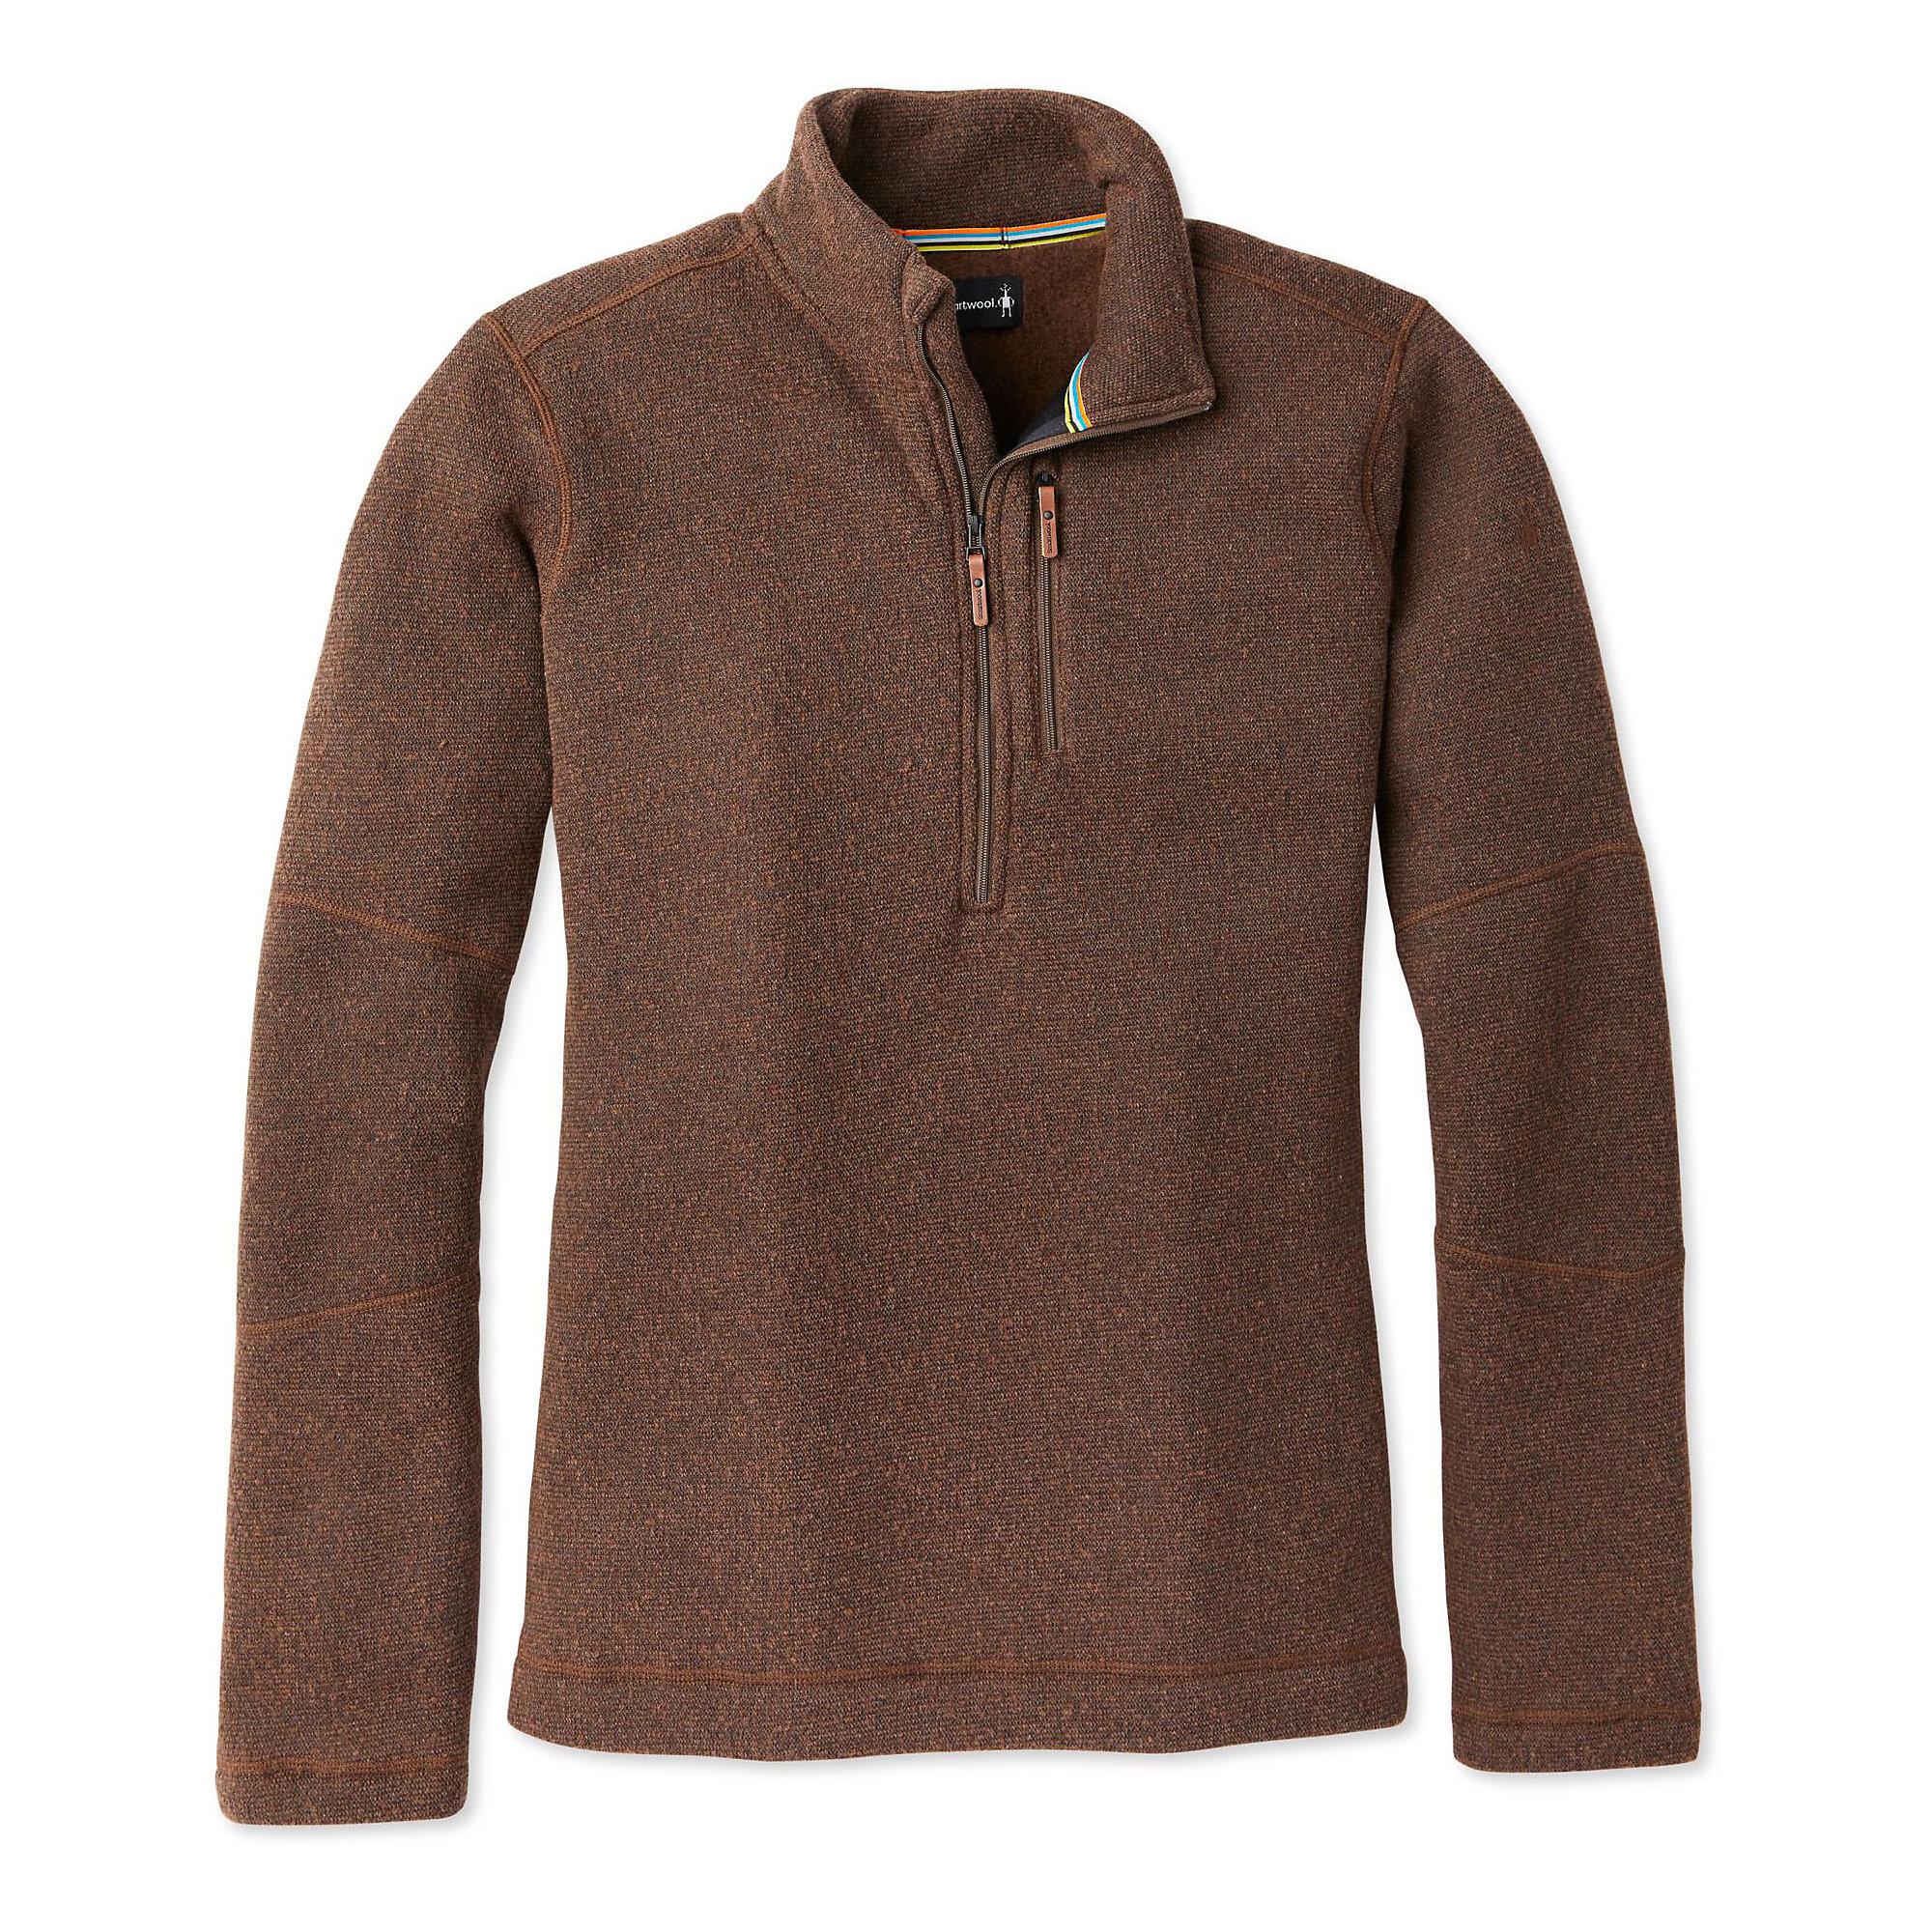 Smartwool Hudson Trail Fleece Half Zip Sweater in Brown for Men - Lyst